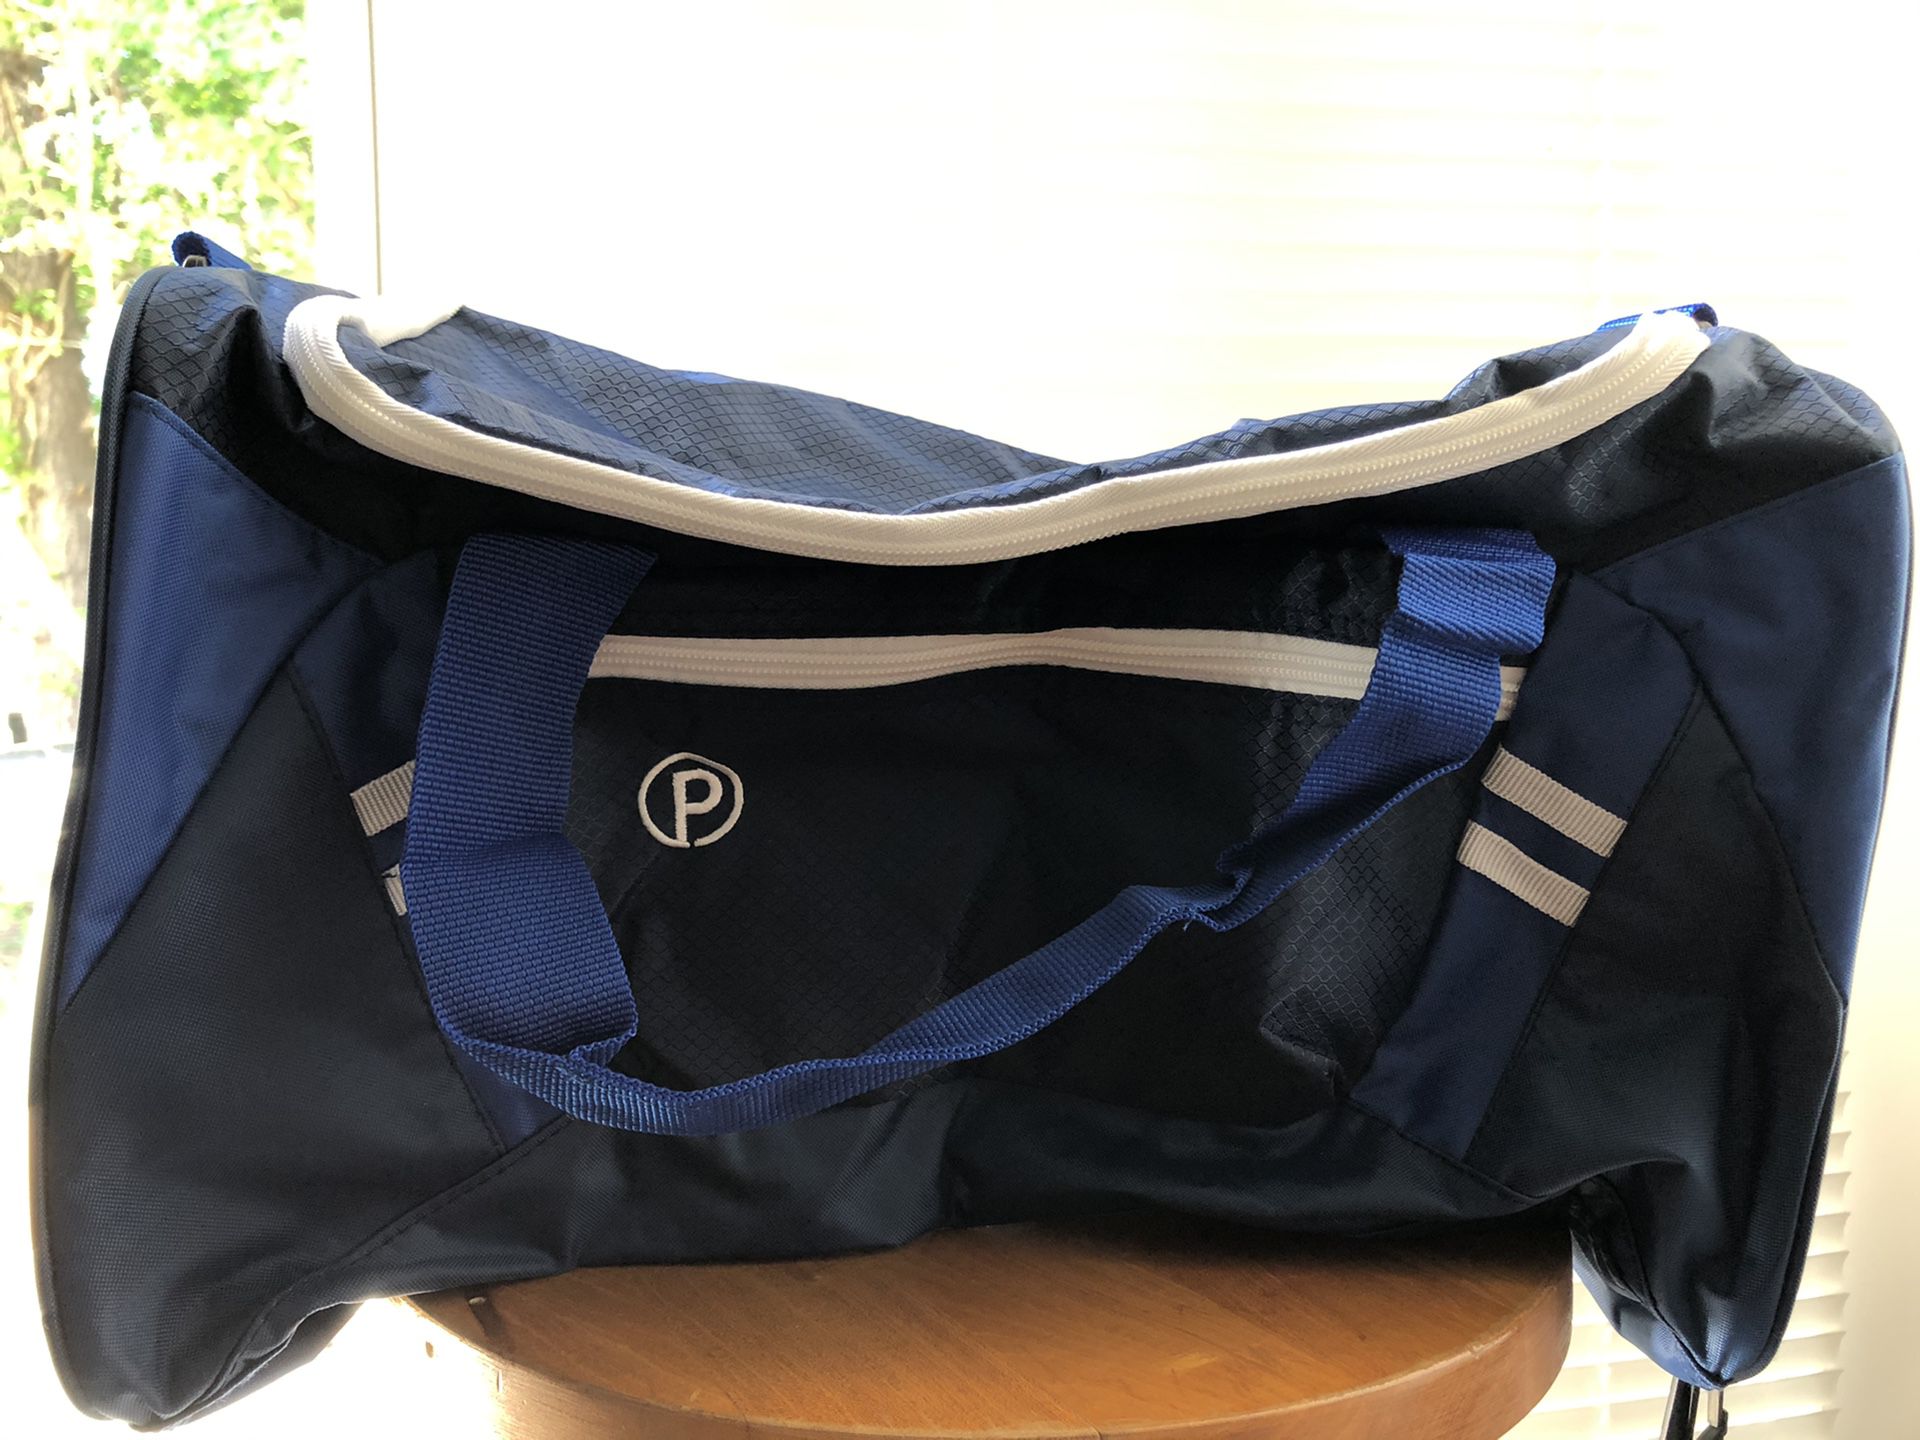 Duffle Bag Brand P